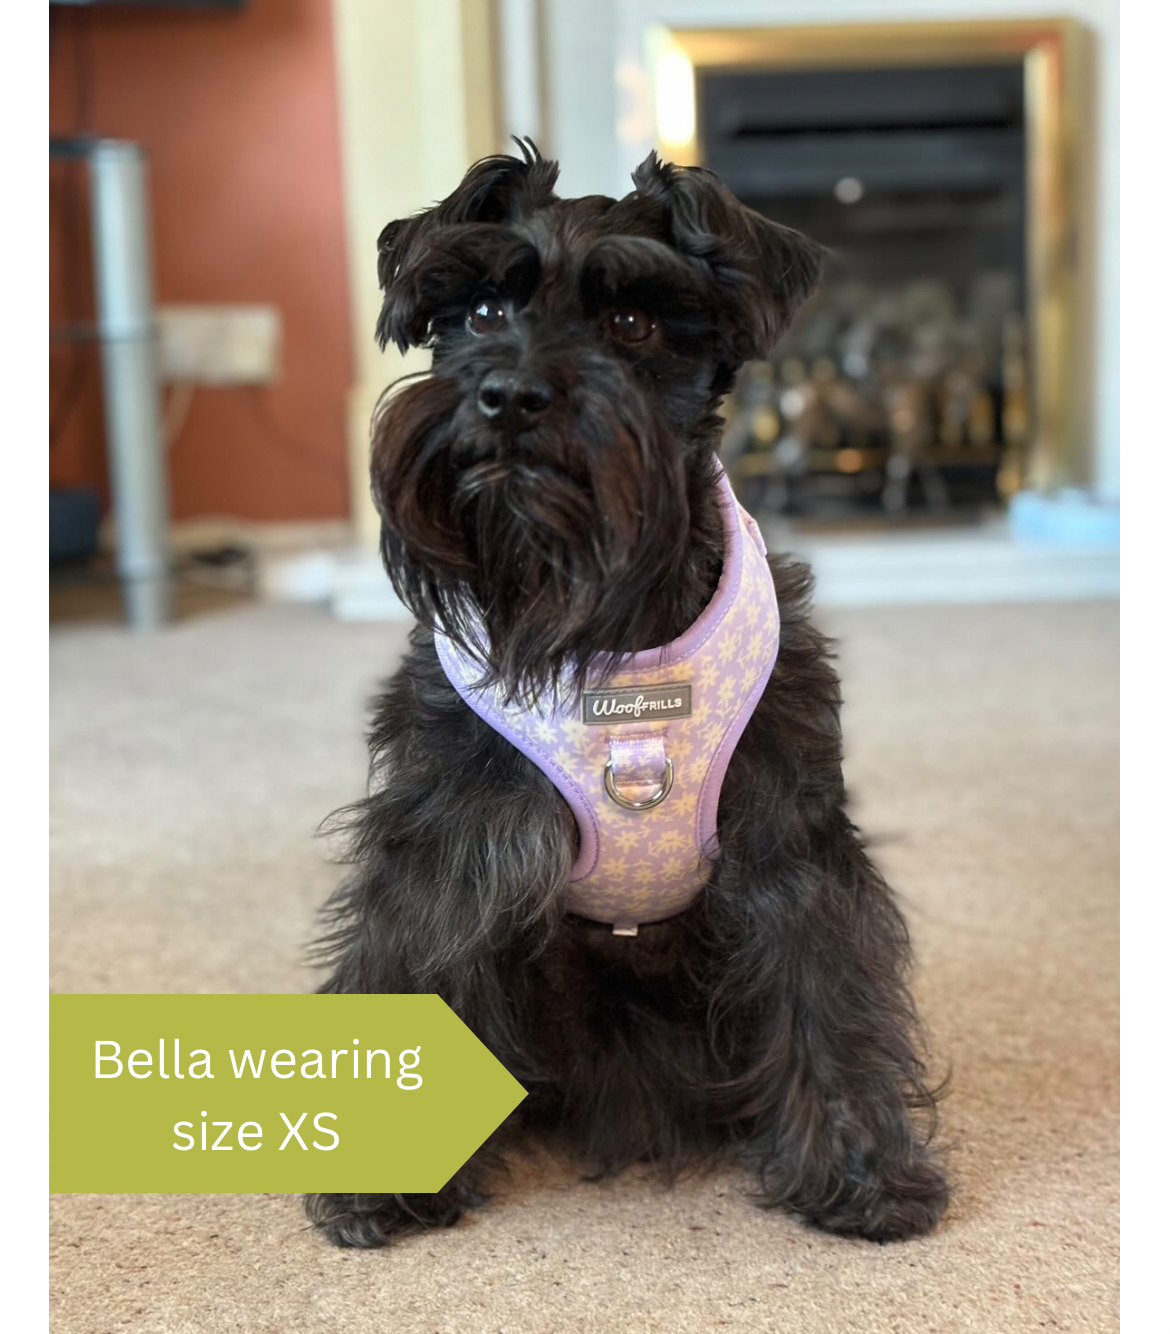 Cute dog wearing a lilac dog harness